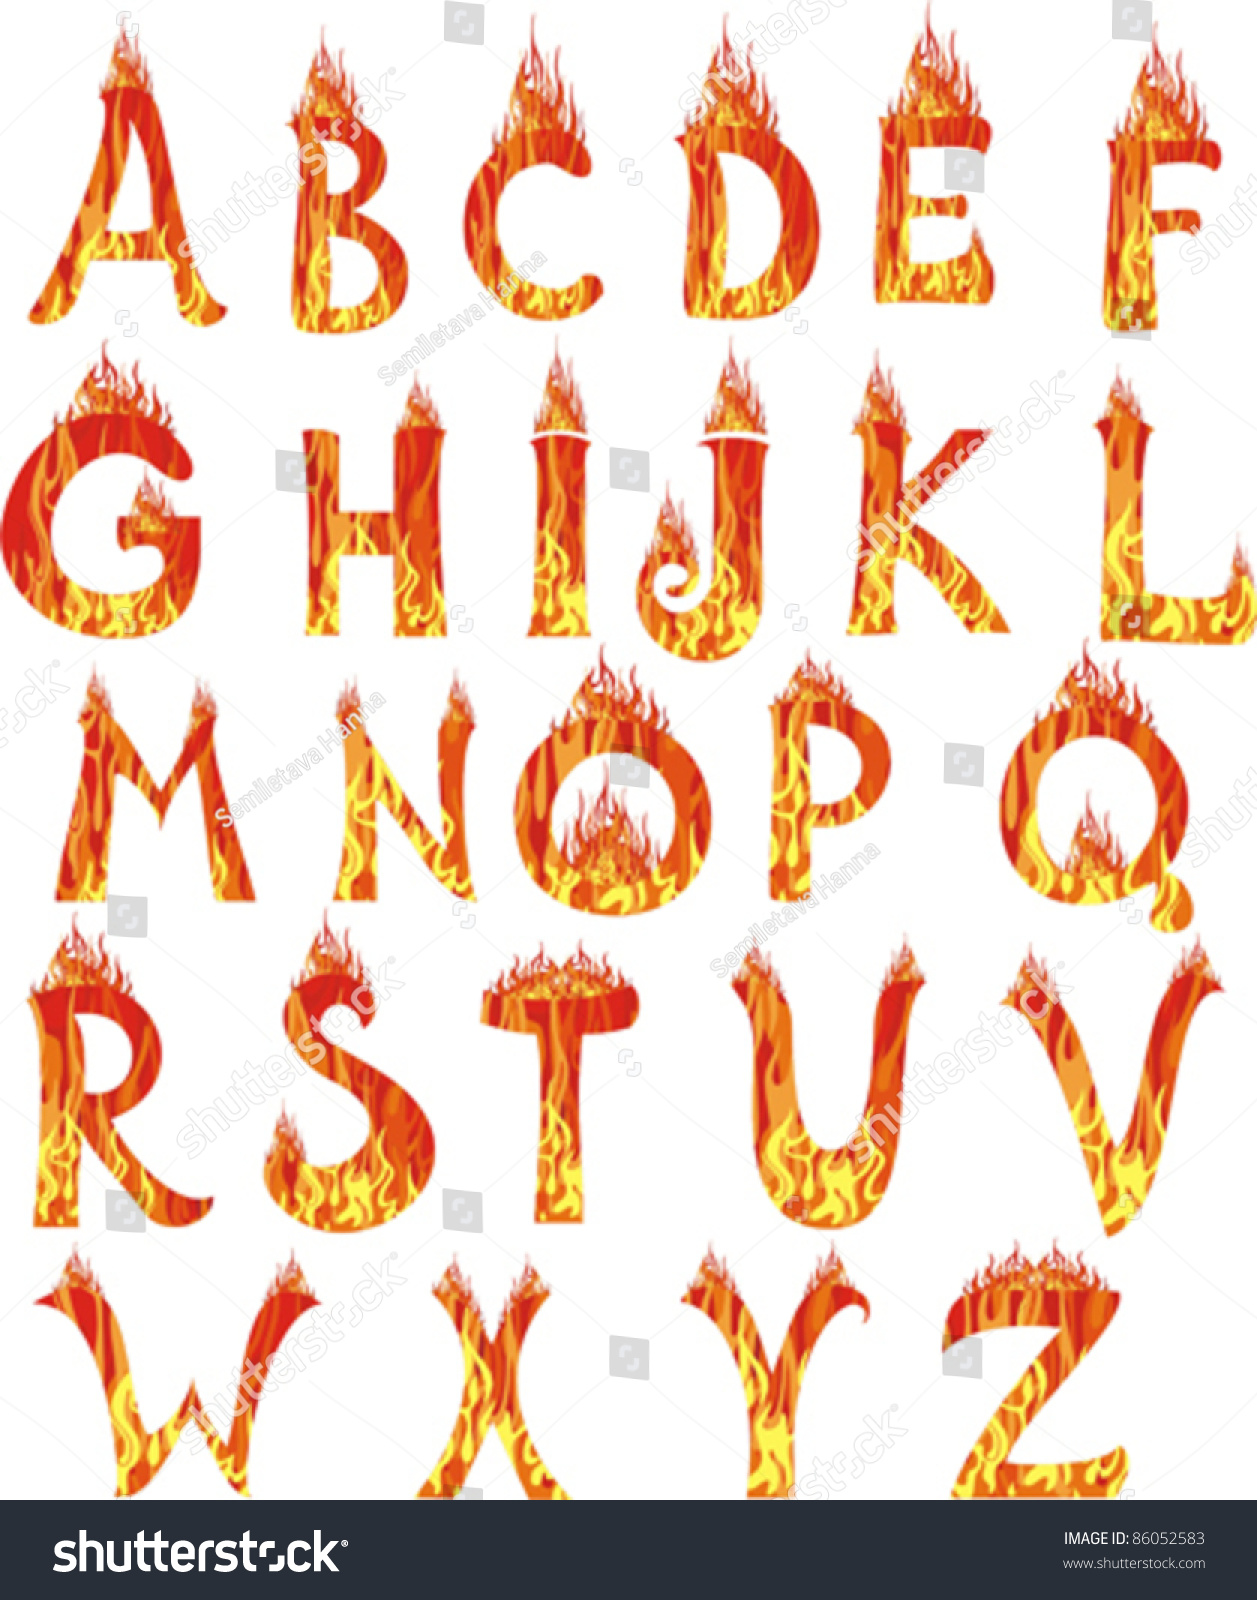 Alfabeto Hecho Con Fuego Alphabet Alphabet Letters Design Fire Images